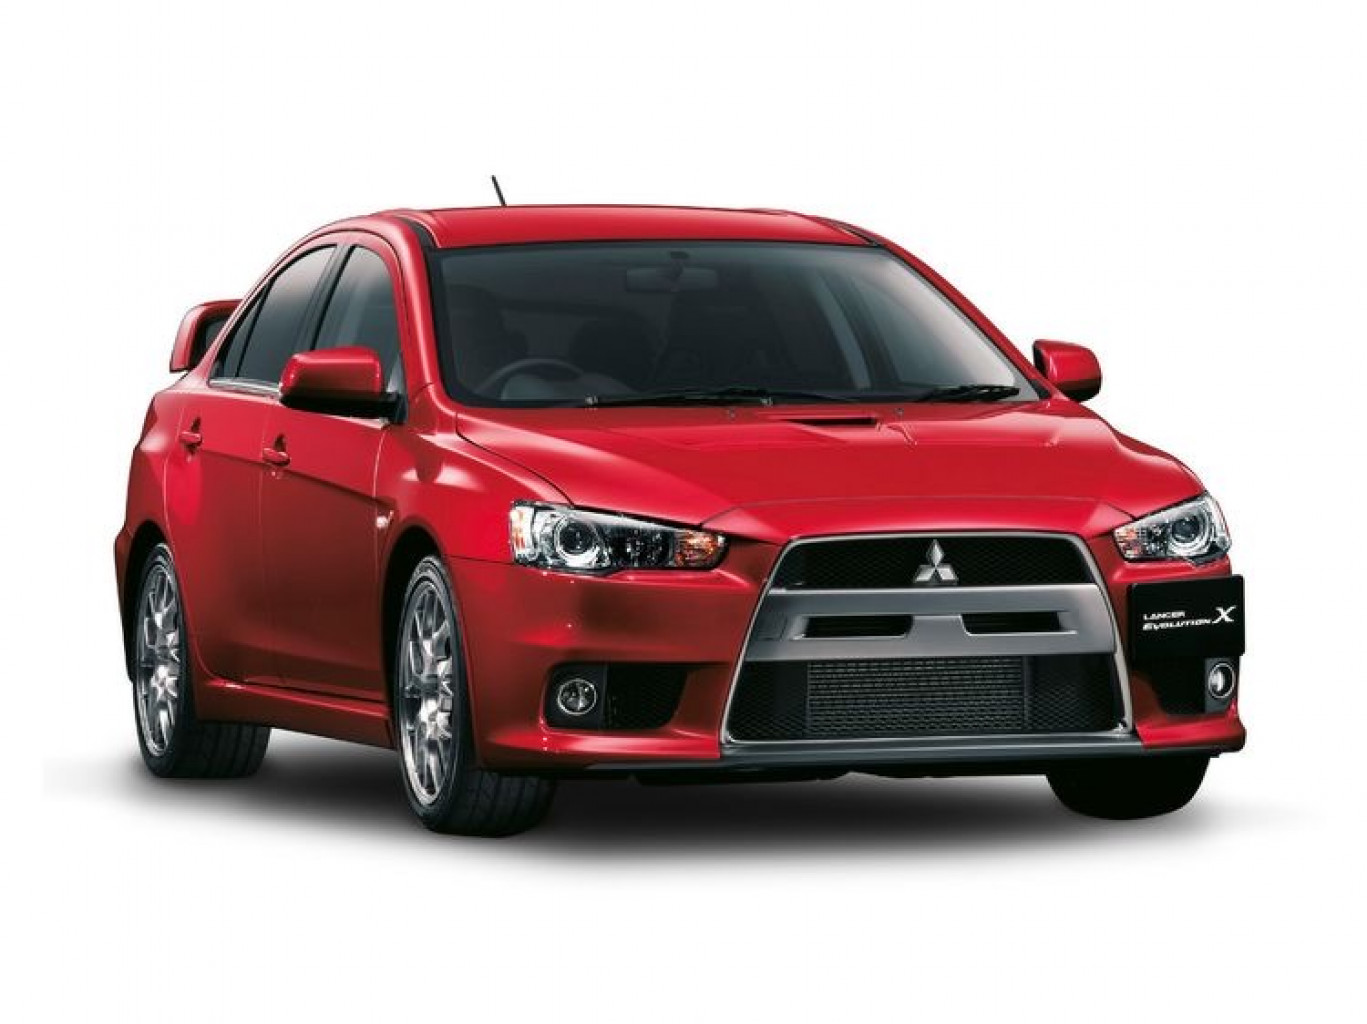 Mitsubishi - полный каталог моделей, характеристики, отзывы на все автомобили mitsubishi (мицубиши)